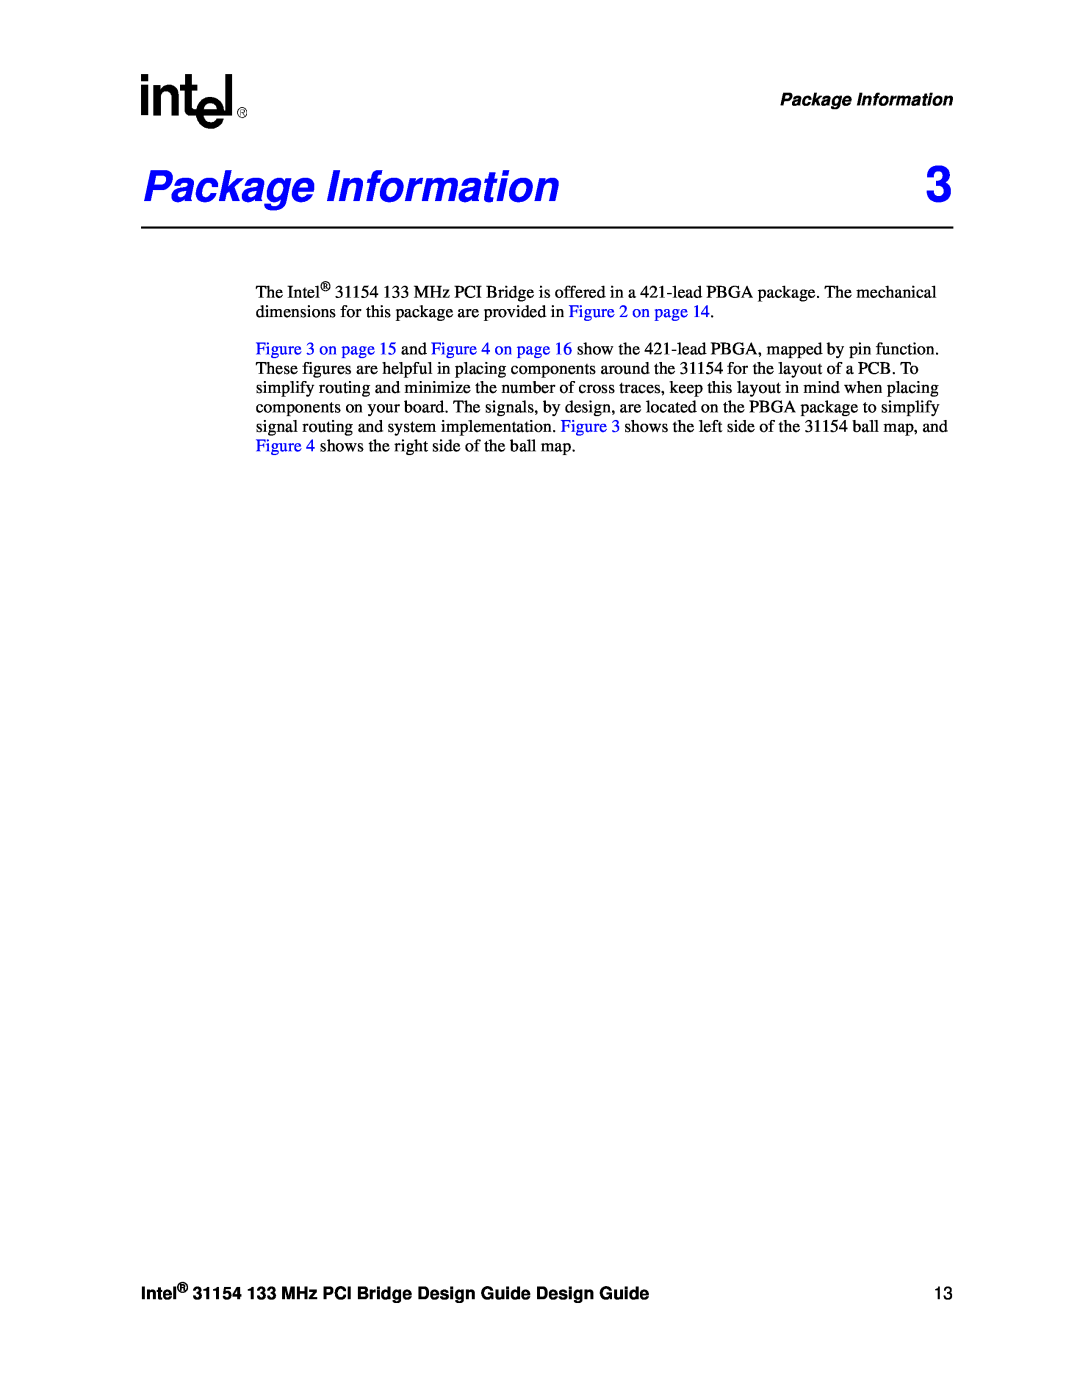 Intel manual Package Information, Intel 31154 133 MHz PCI Bridge Design Guide Design Guide 